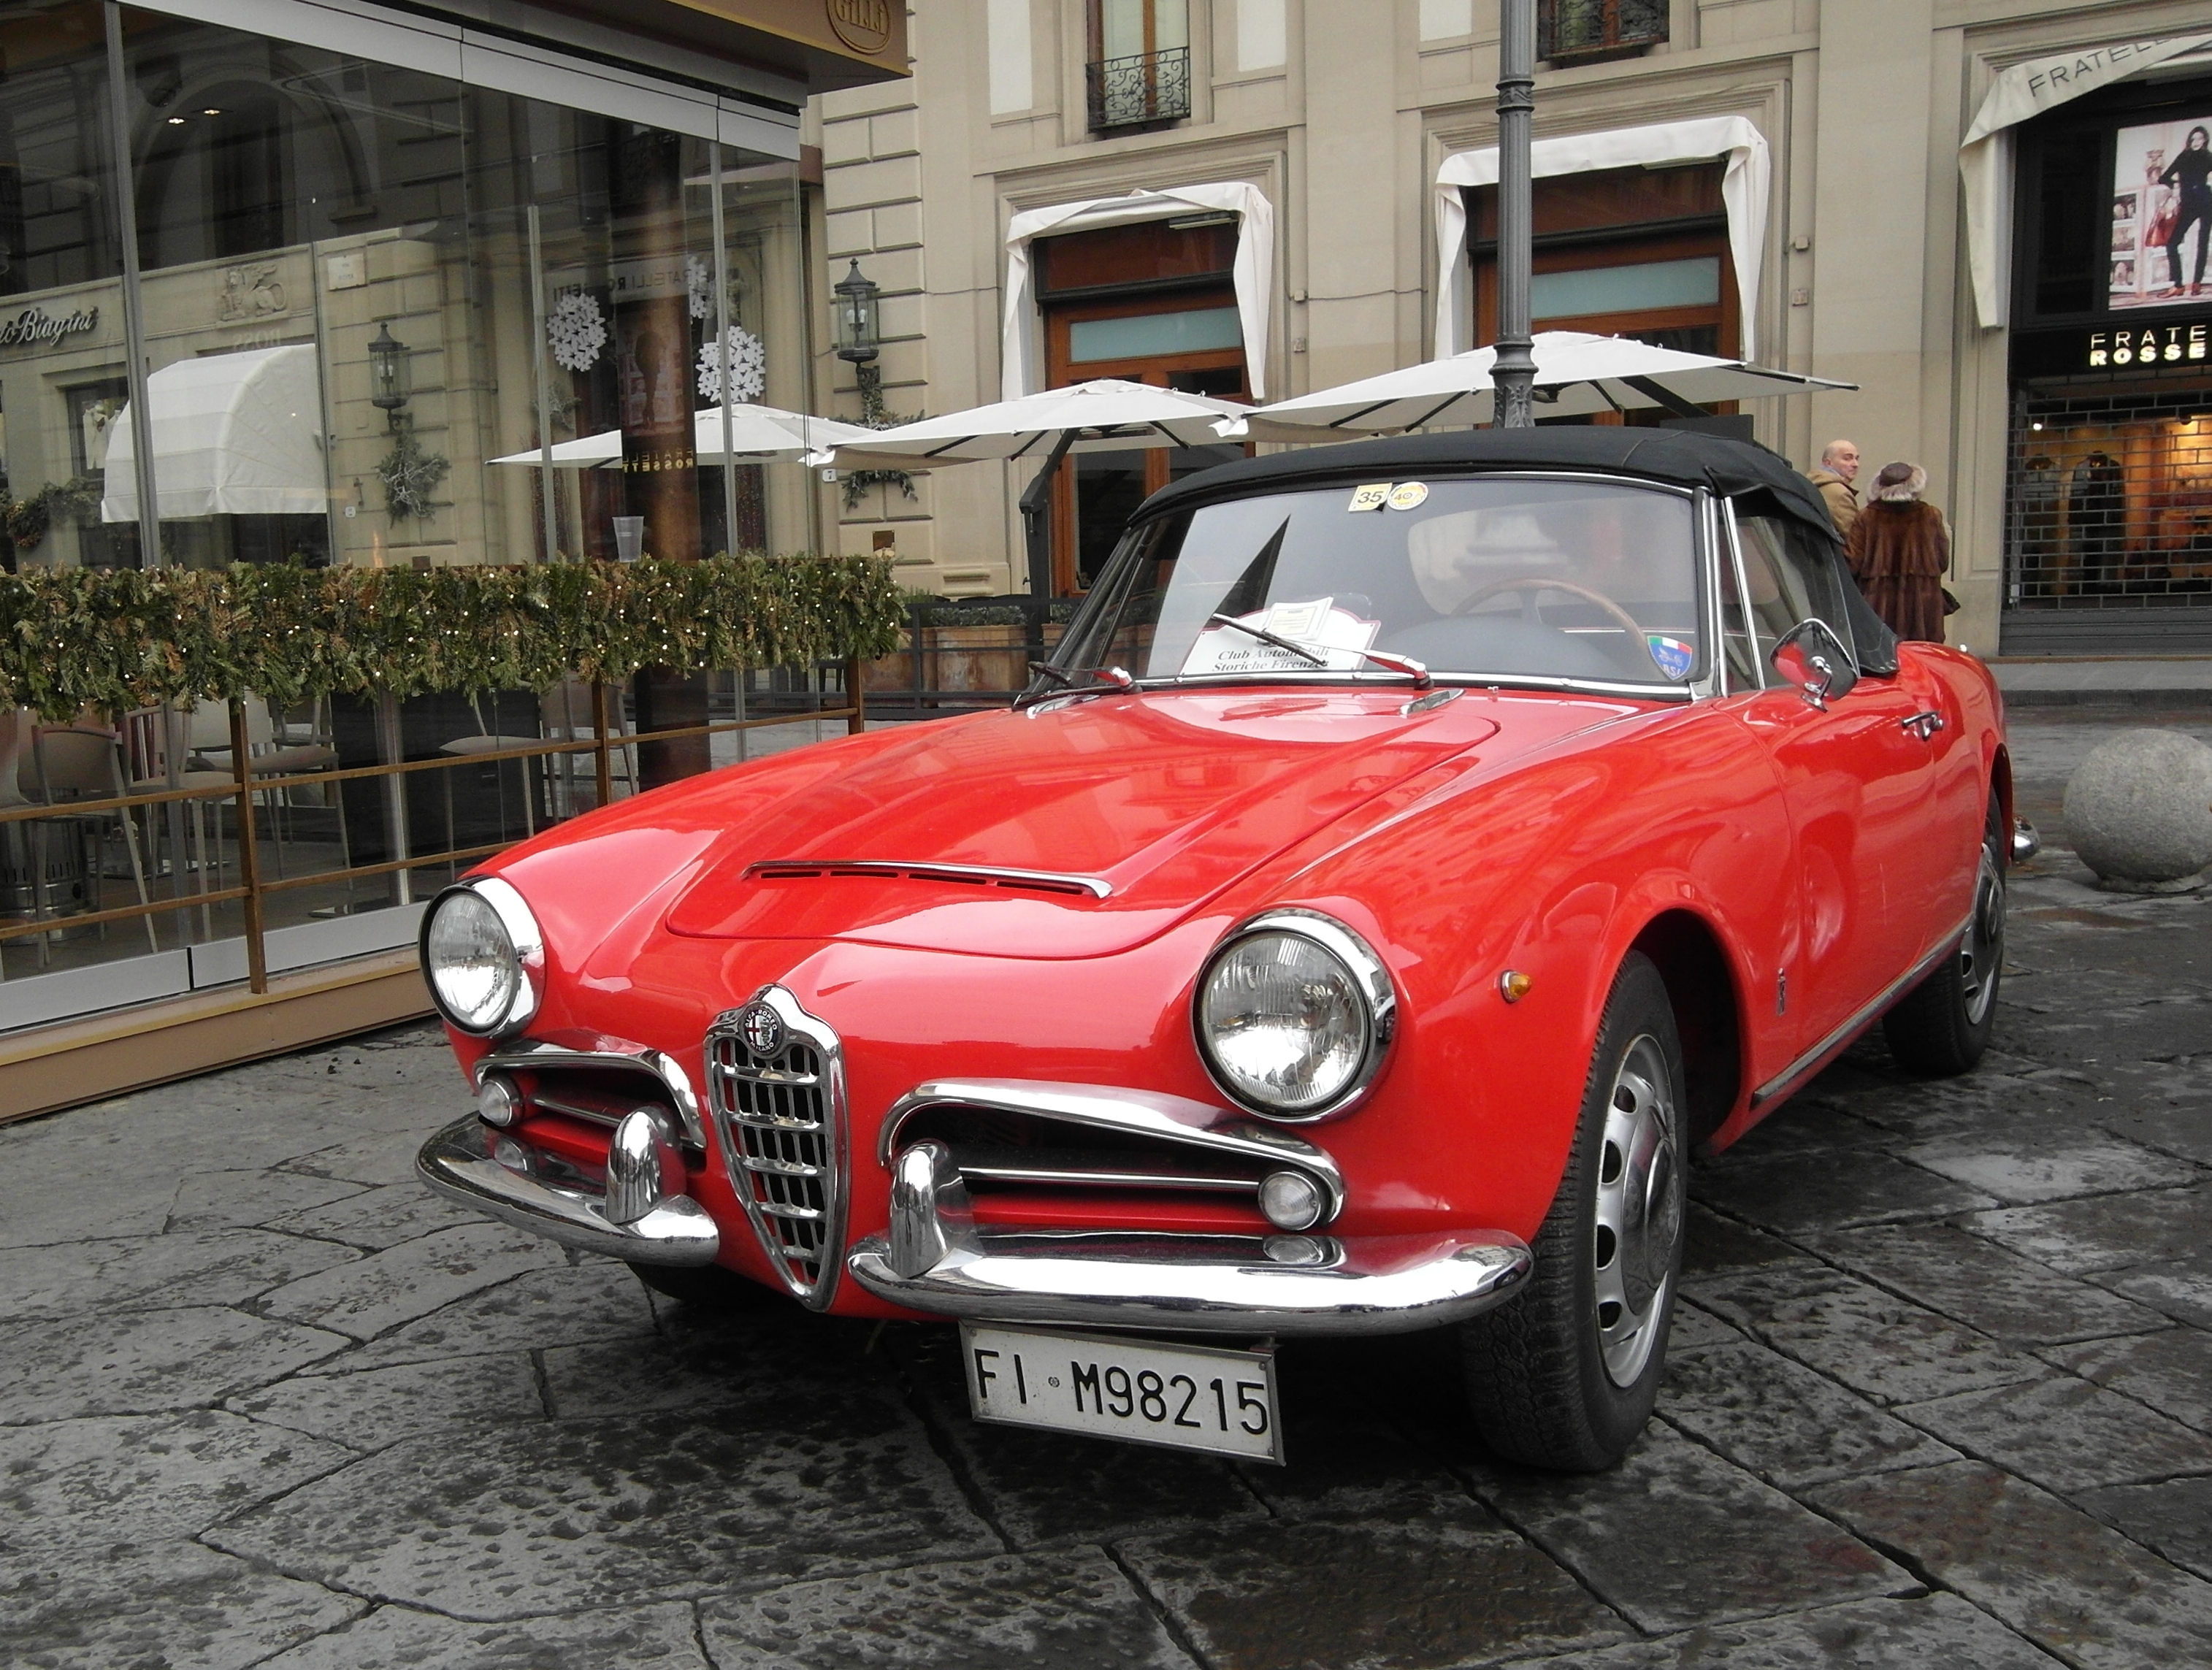 Classic Alfa Romeo Giulietta Spider - Florence - Italy | Flickr ...